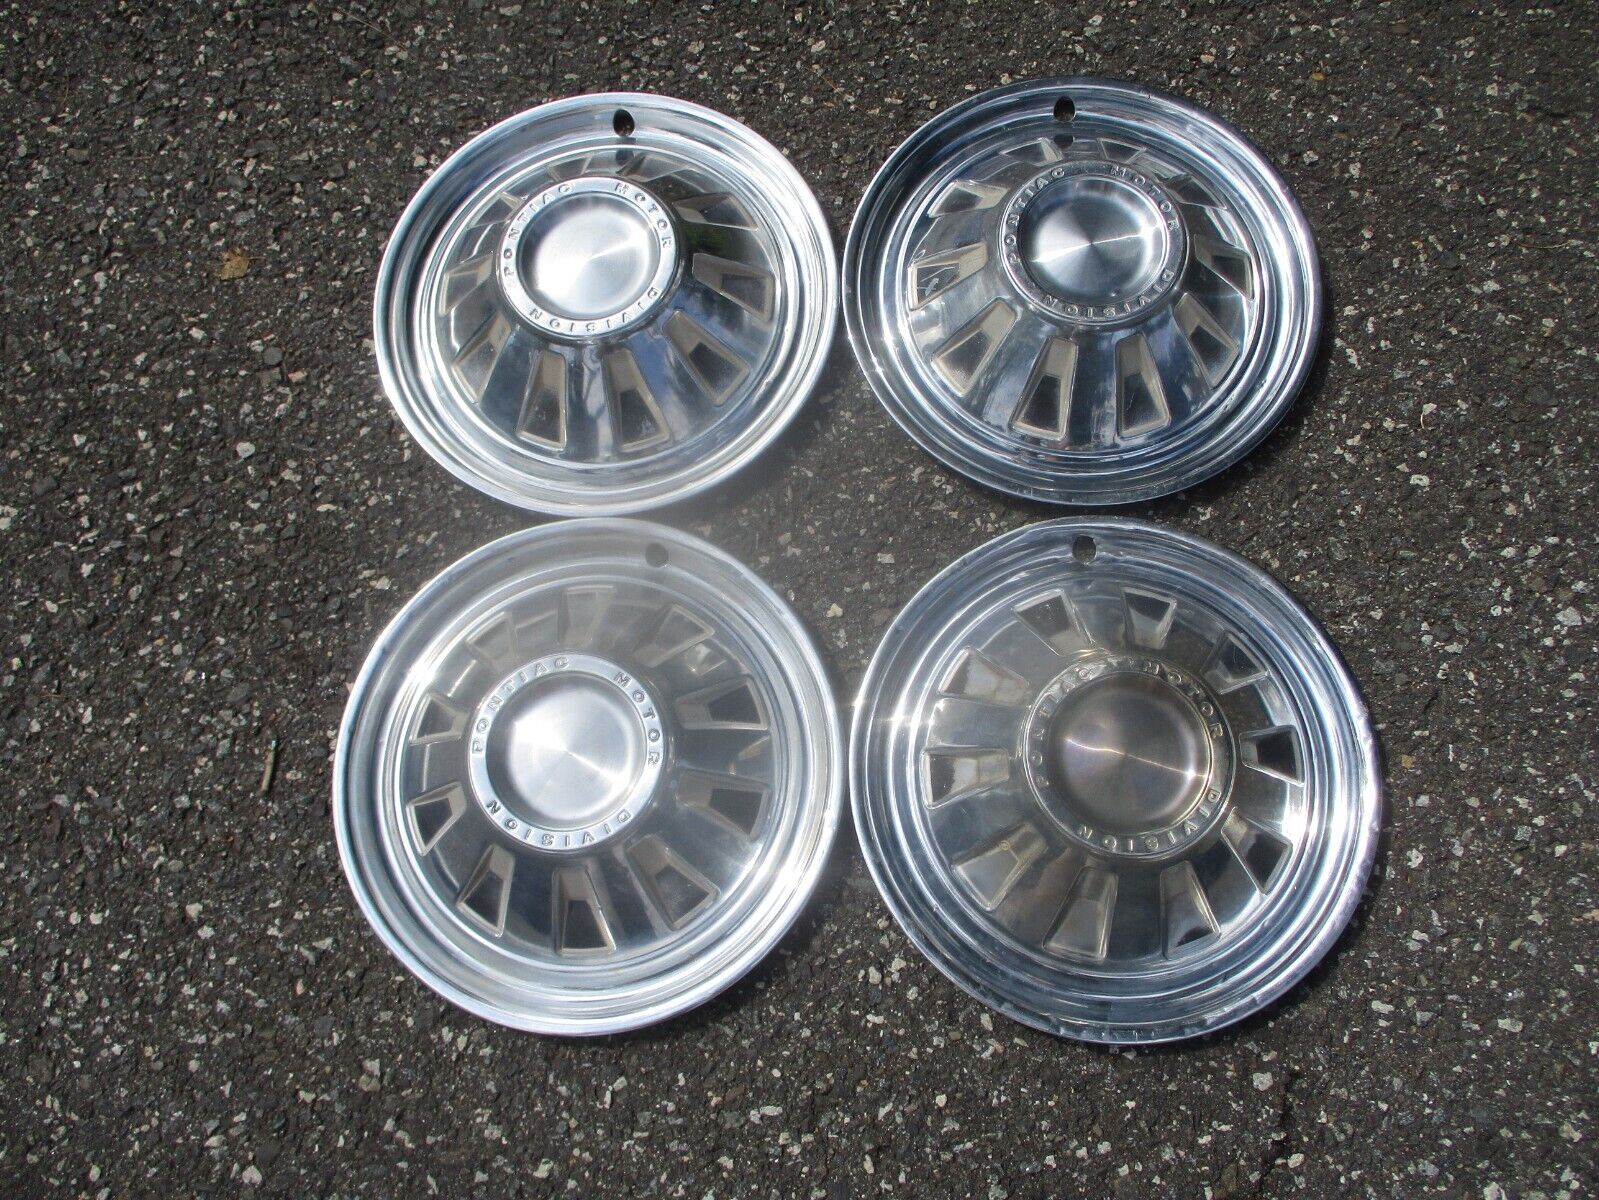 Factory original 1964 Pontiac Tempest 14 inch hubcaps wheel covers